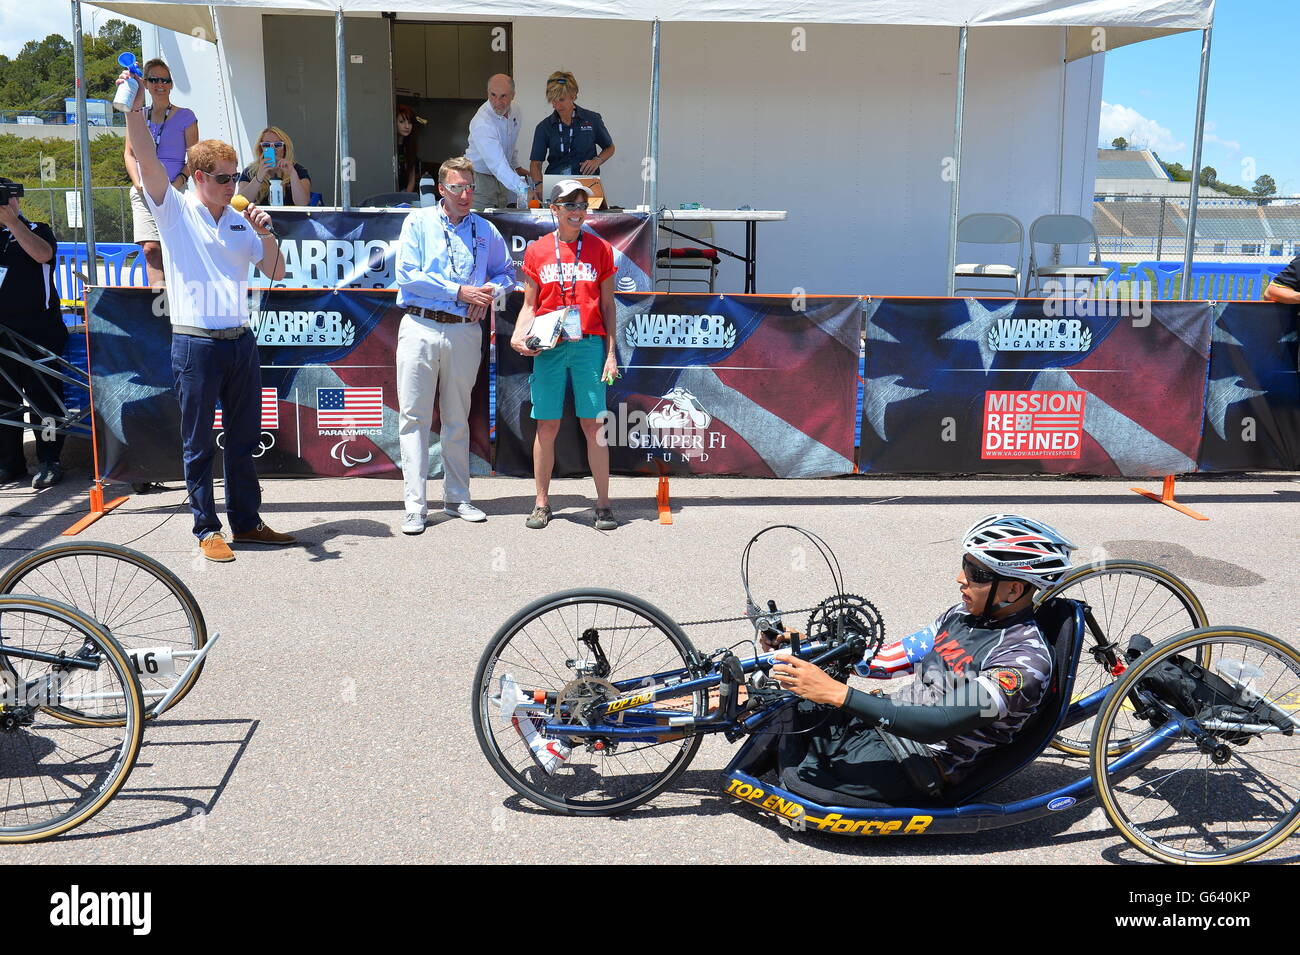 Prince Harry inizia l'evento ciclistico Warrior Games presso la base della US Air Force Academy a Colorado Springs, USA. Foto Stock